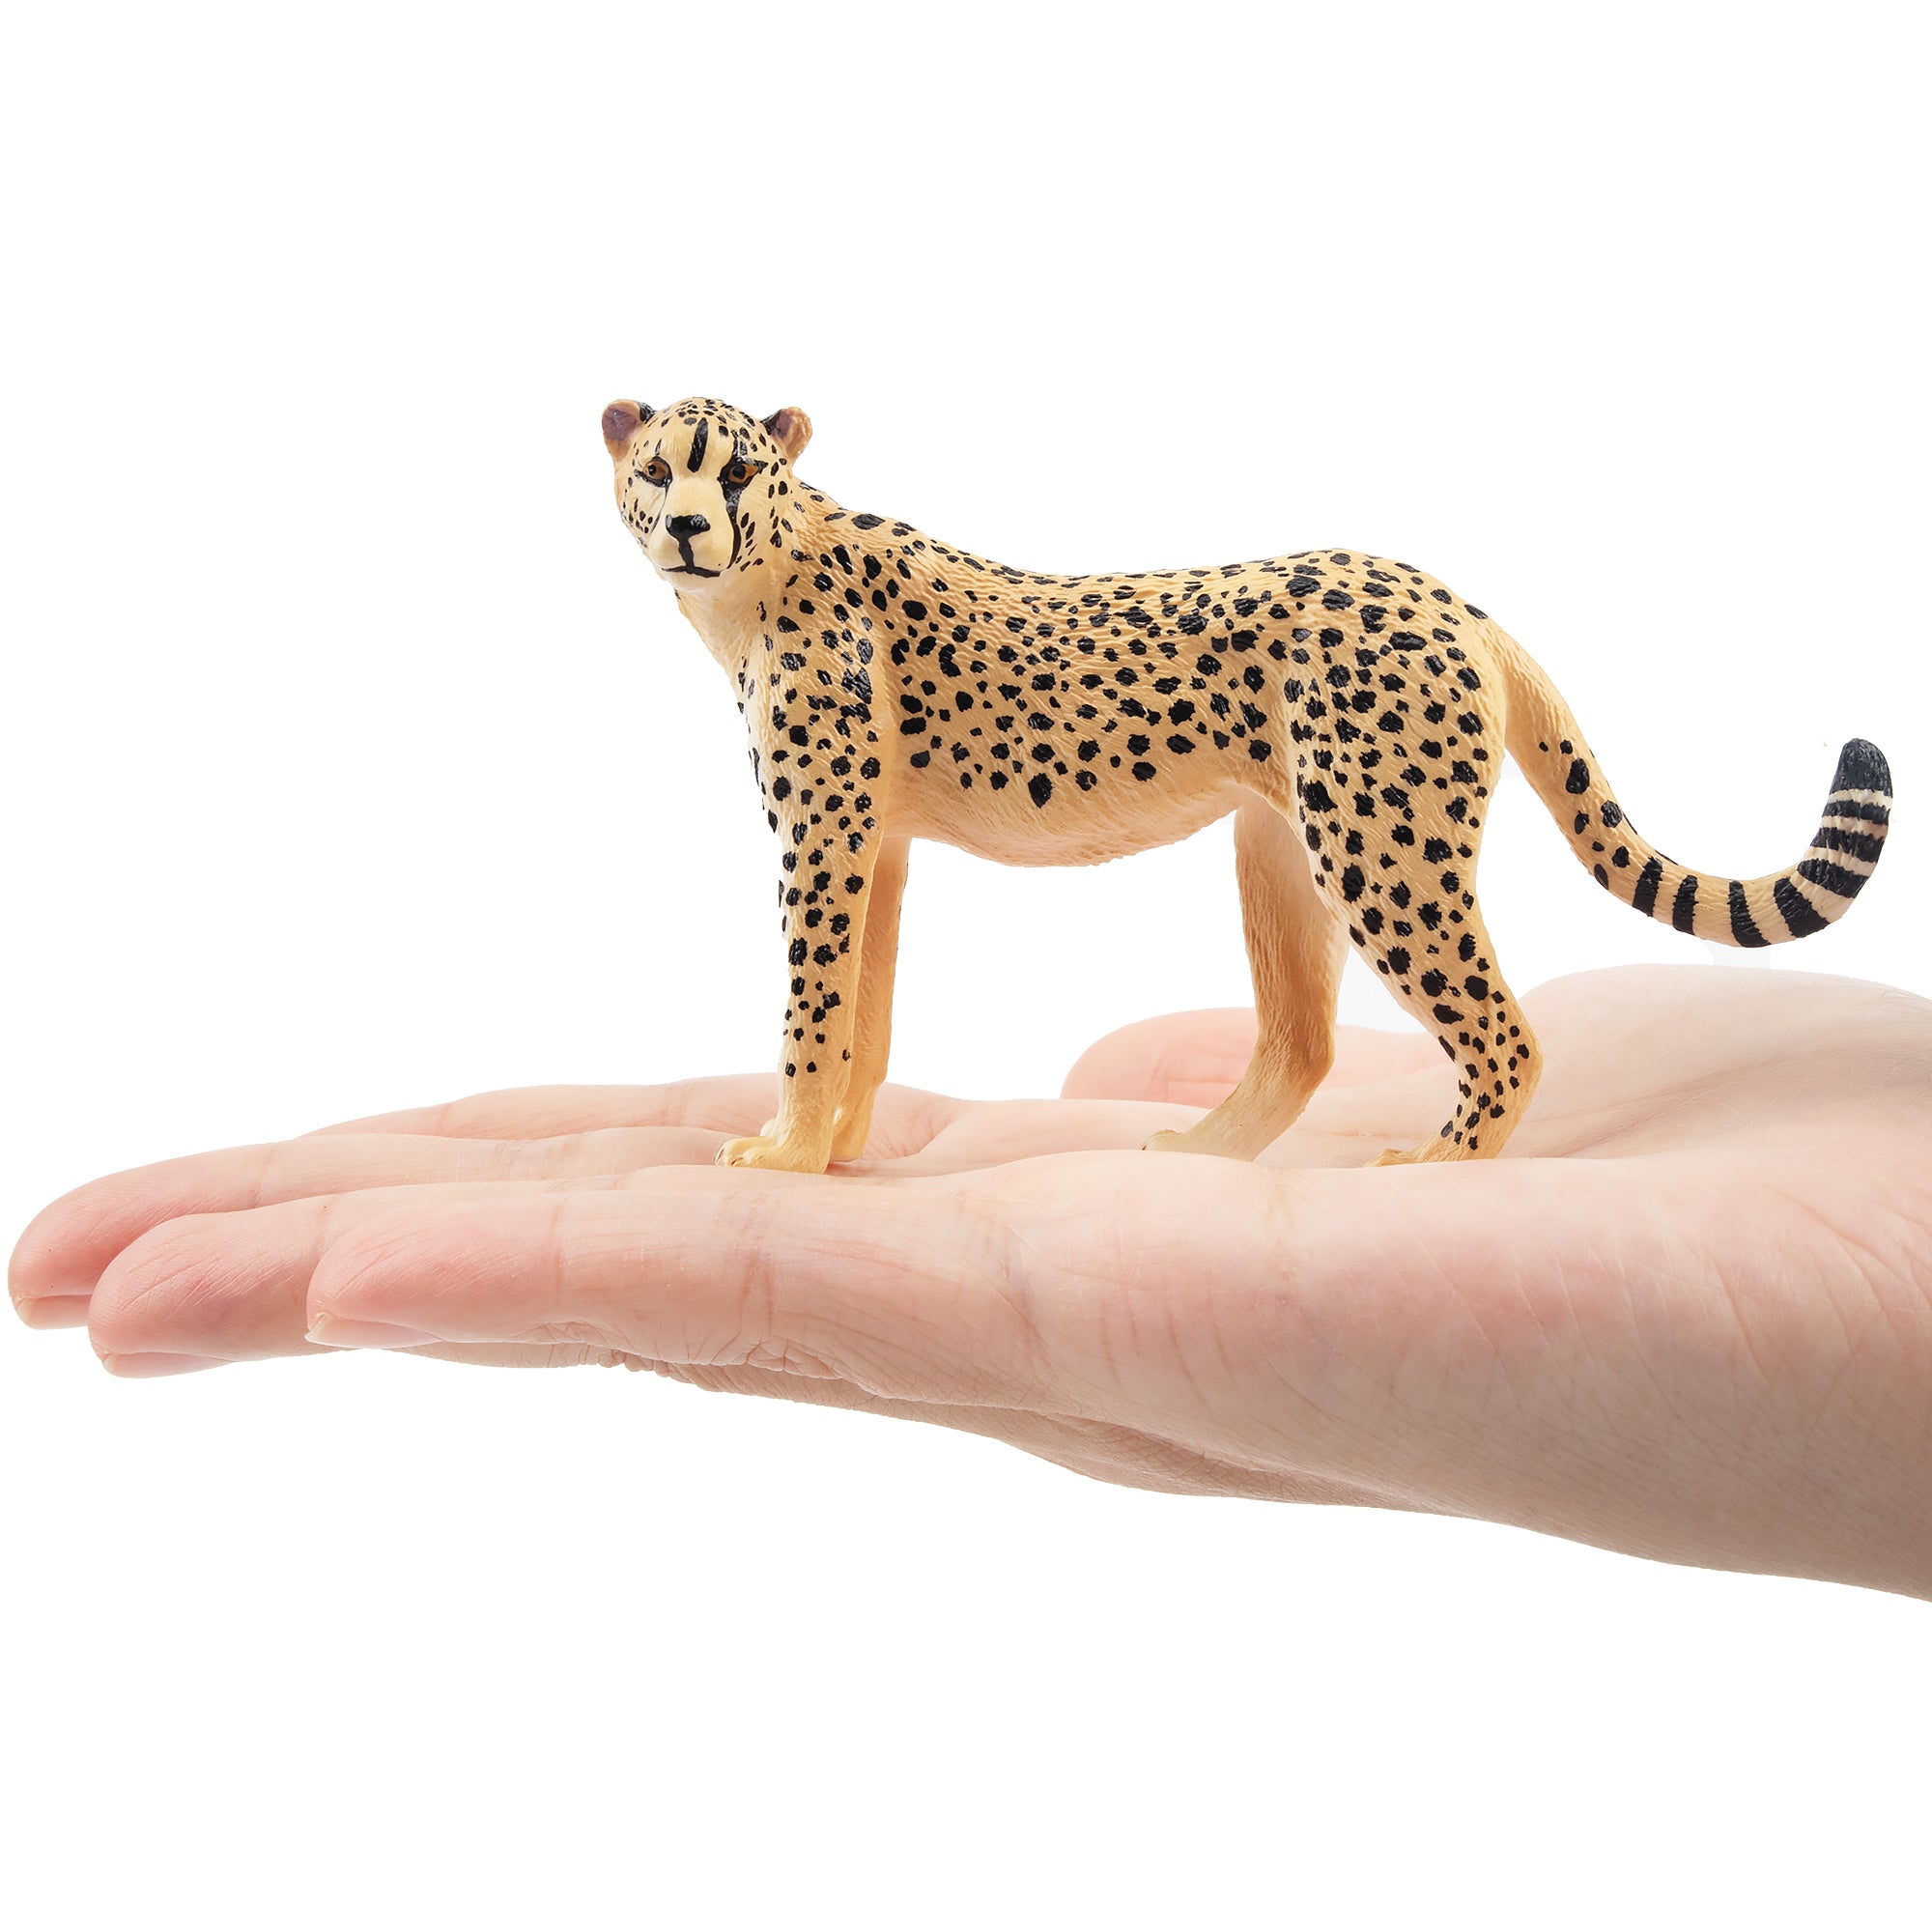 Toymany Cheetah Figurine Toy-on hand